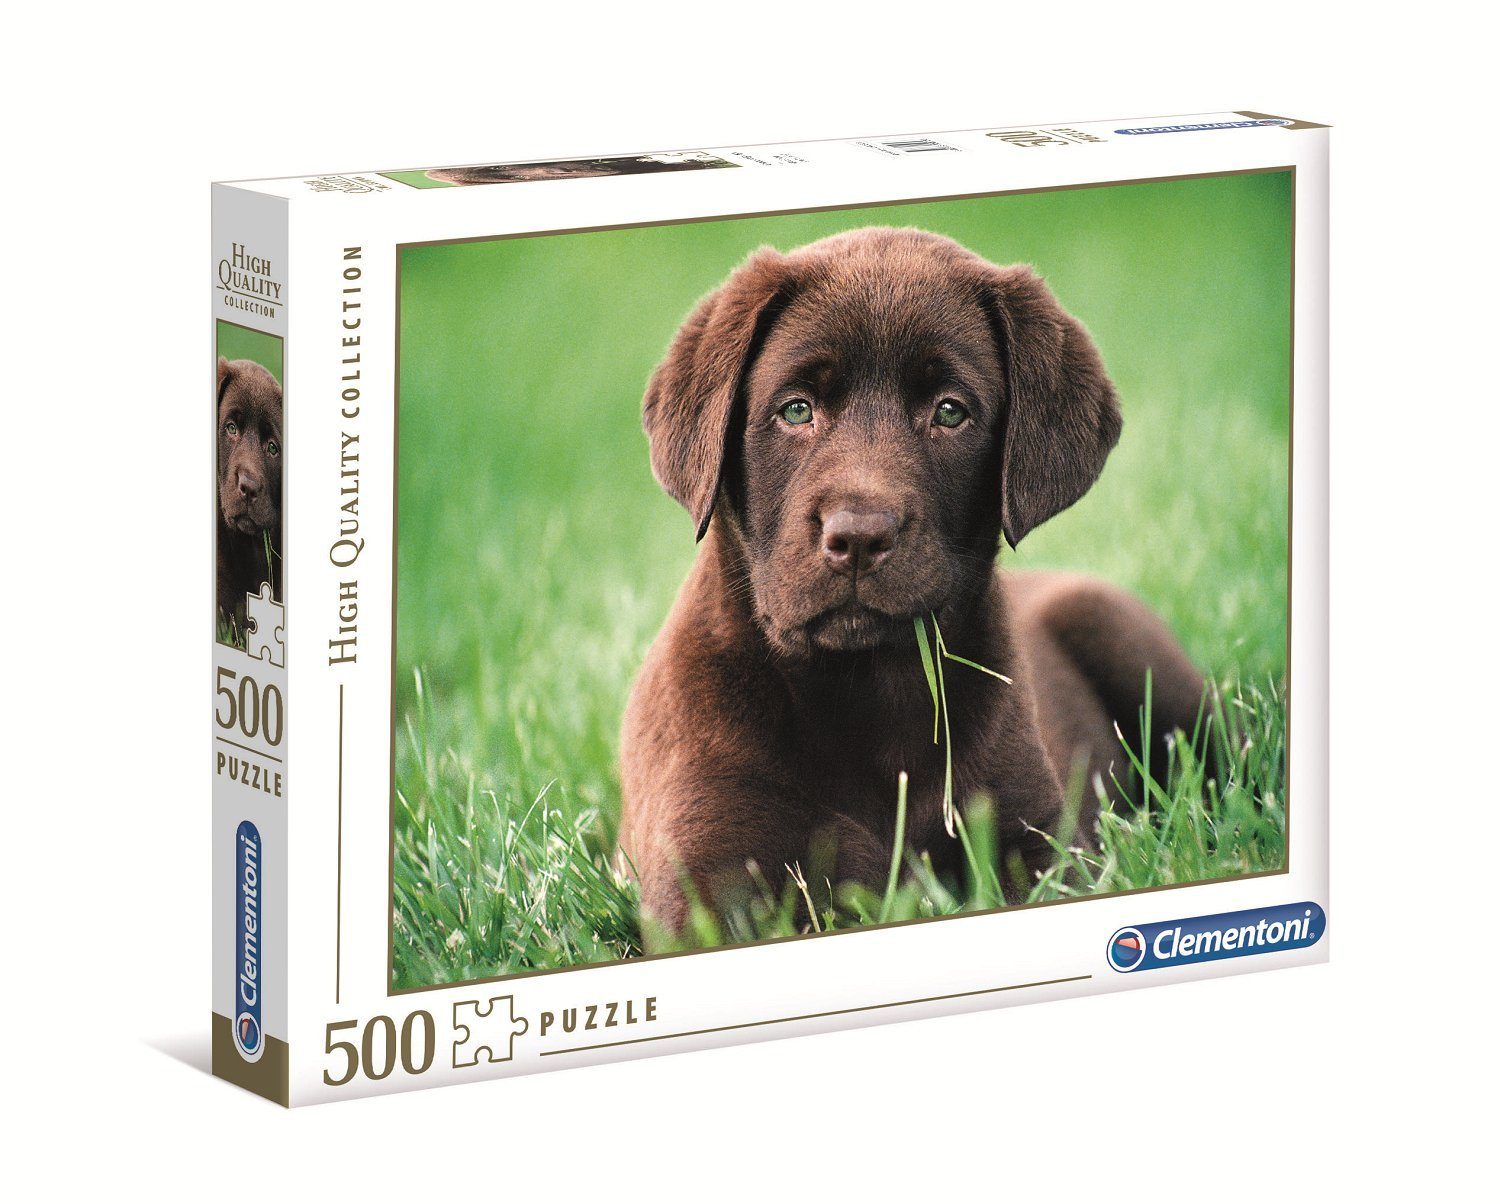 Clementoni® Puzzle High Quality Collection Chocolate Puppy 500 Teile, Puzzleteile | Puzzle